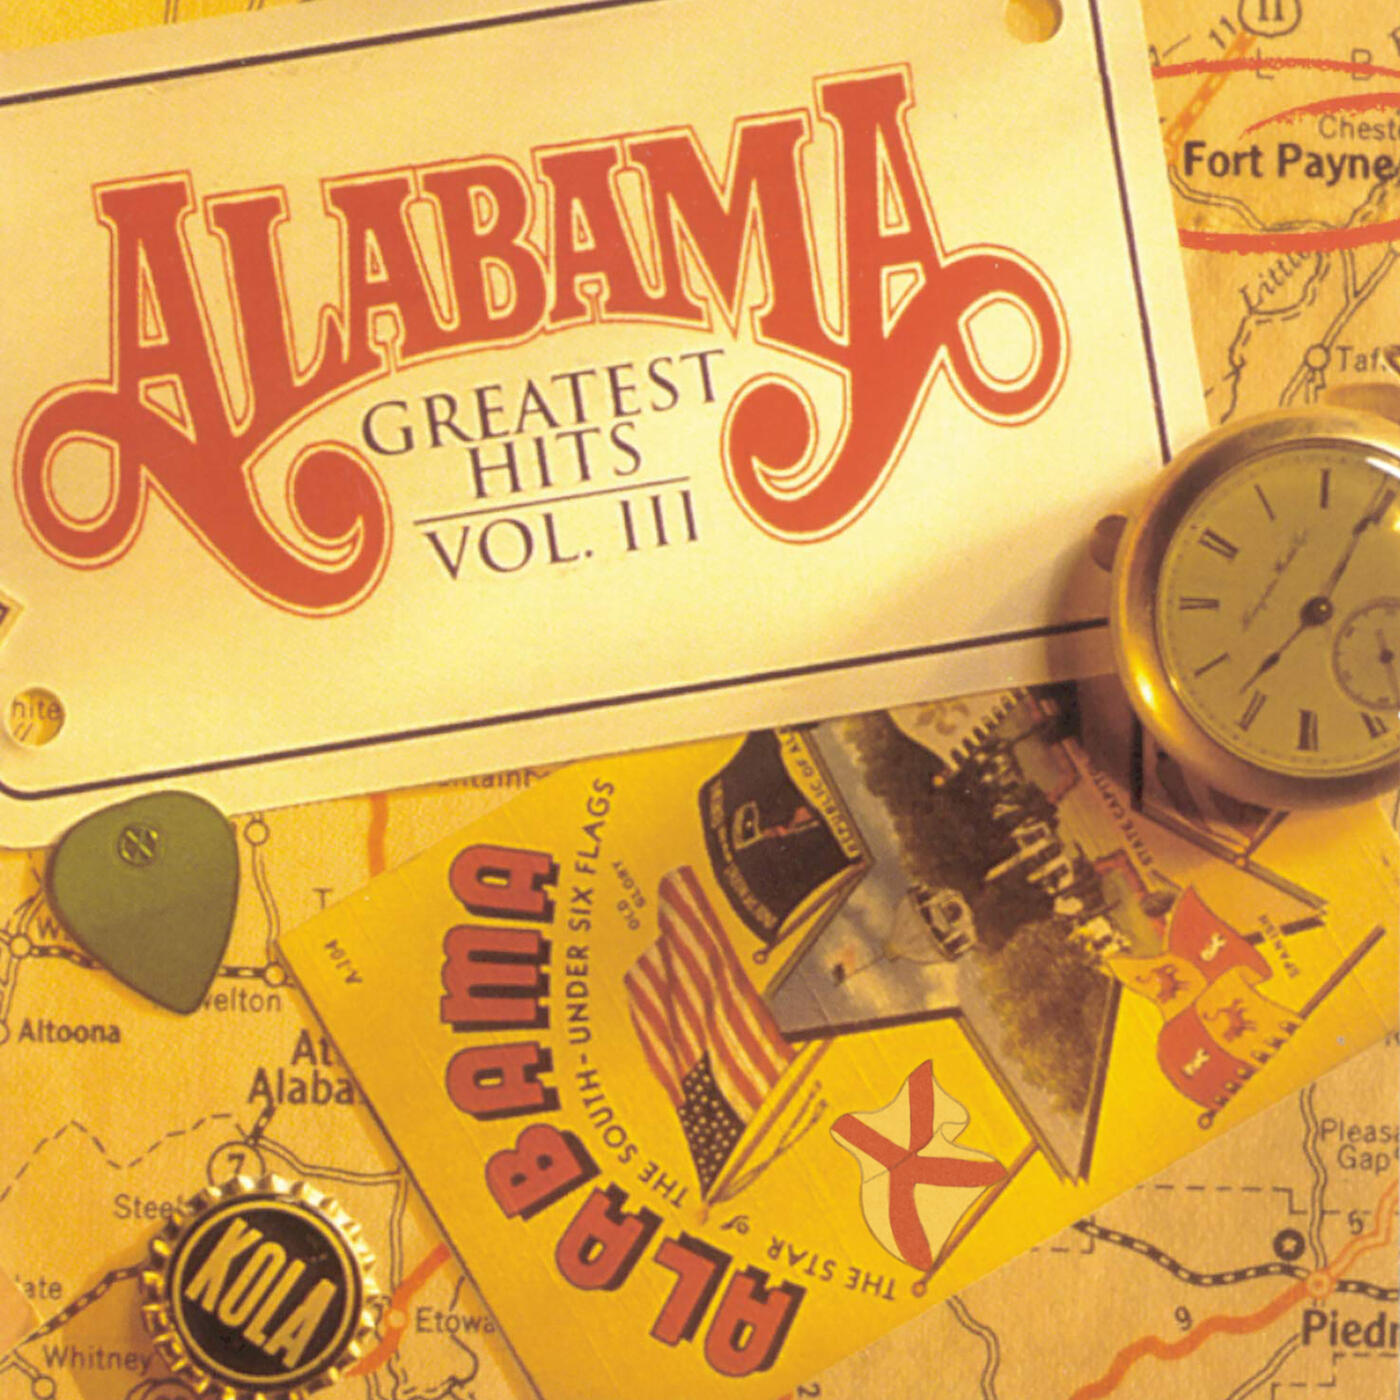 Alabama Greatest Hits Vol. III iHeart